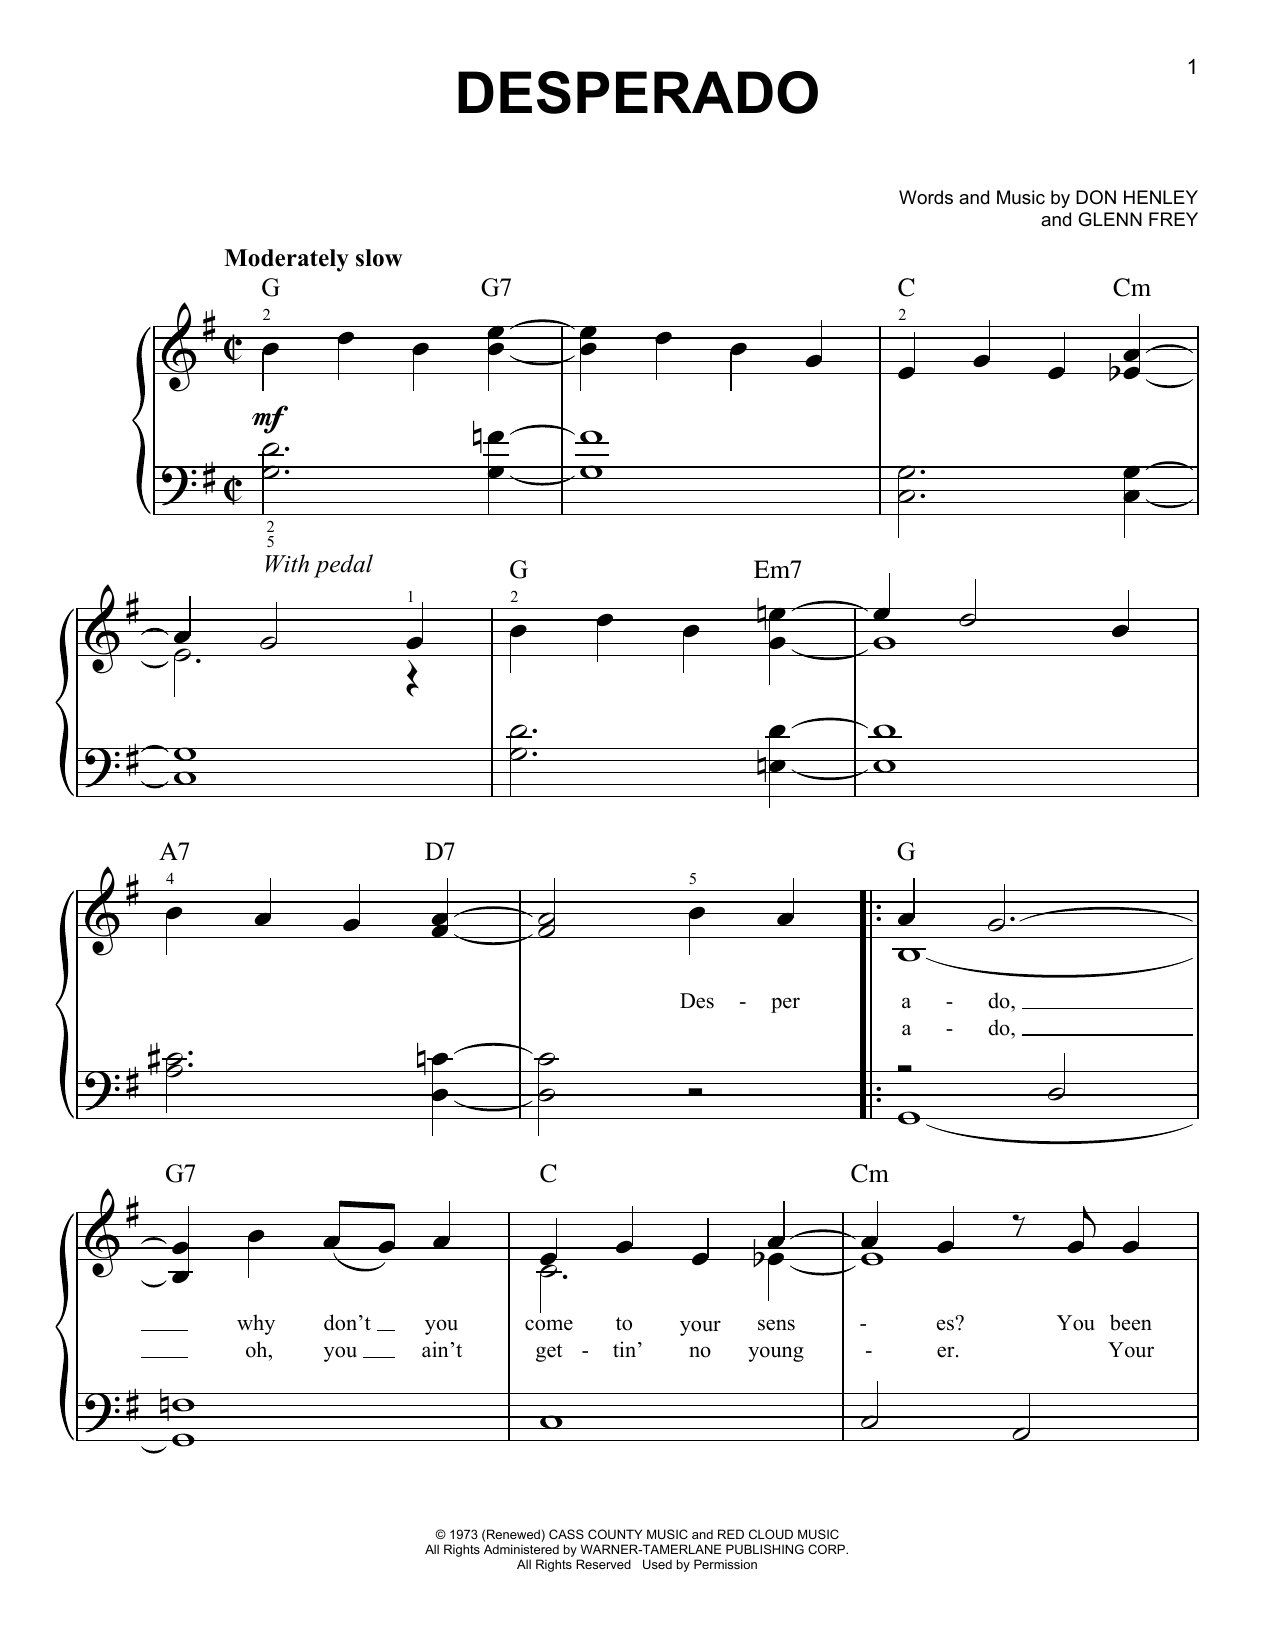 Desperado by The Eagles  Lyrics with Guitar Chords - Uberchord App